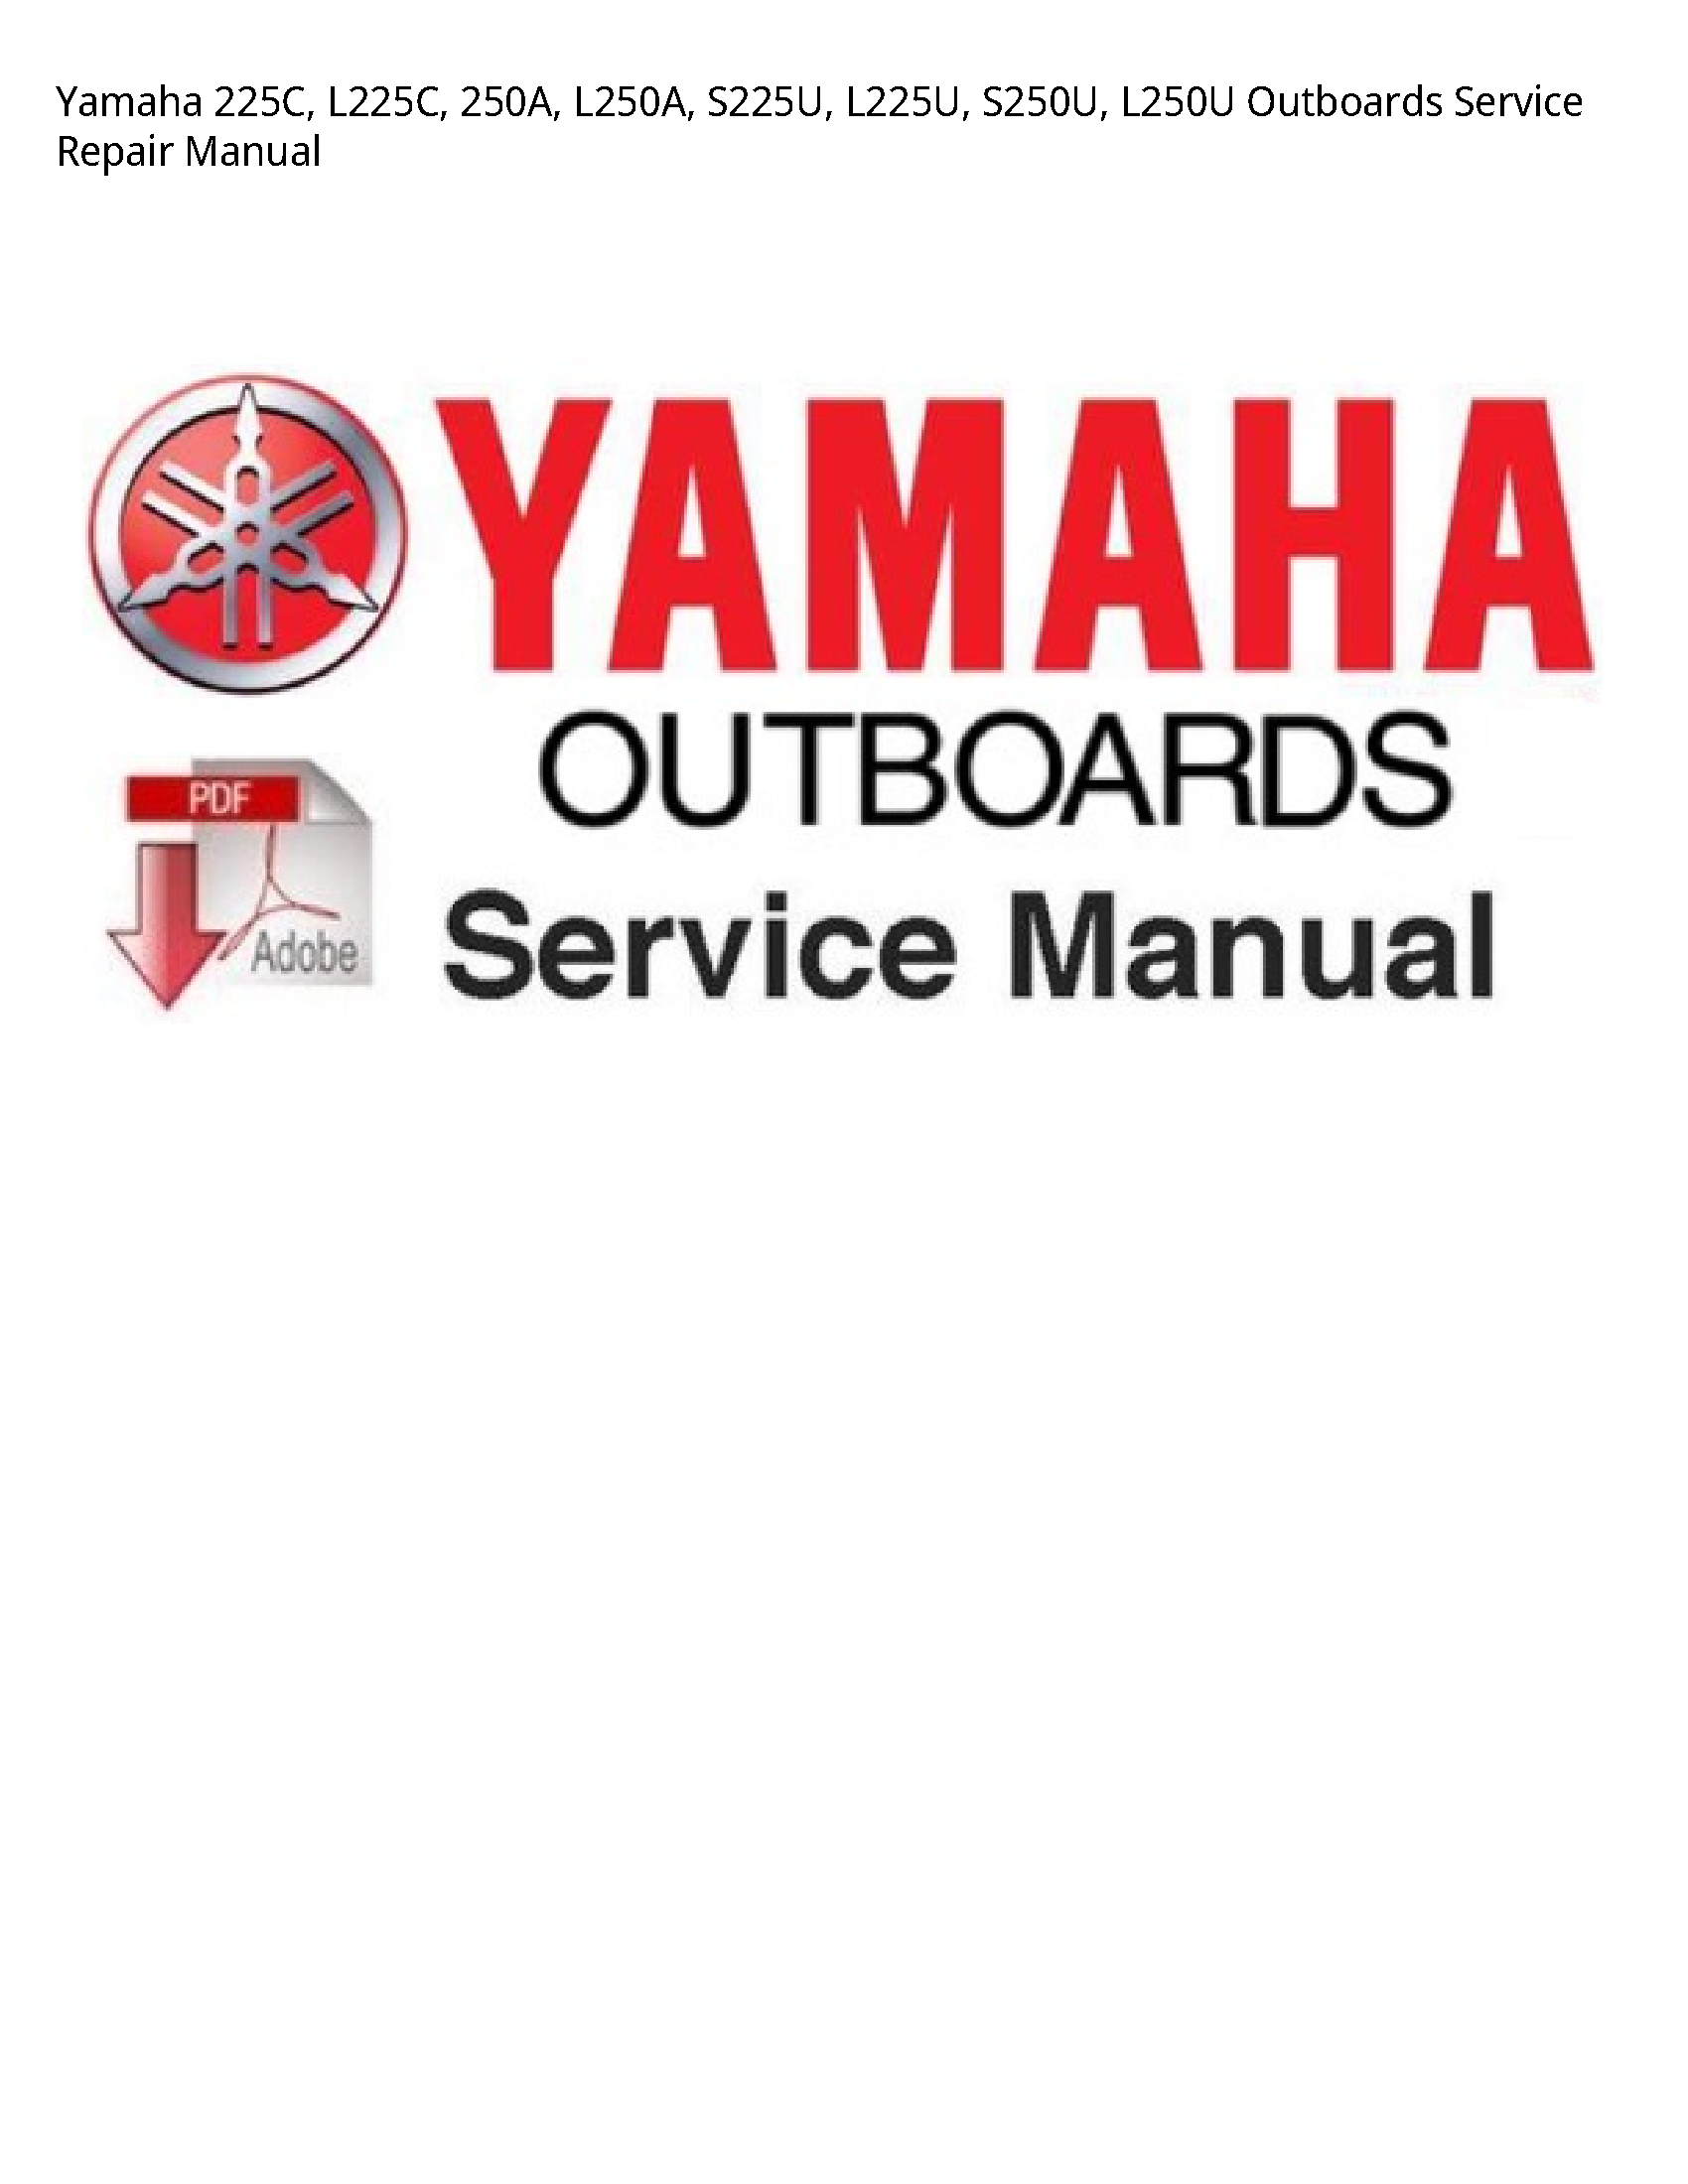 Yamaha 225C Outboards manual